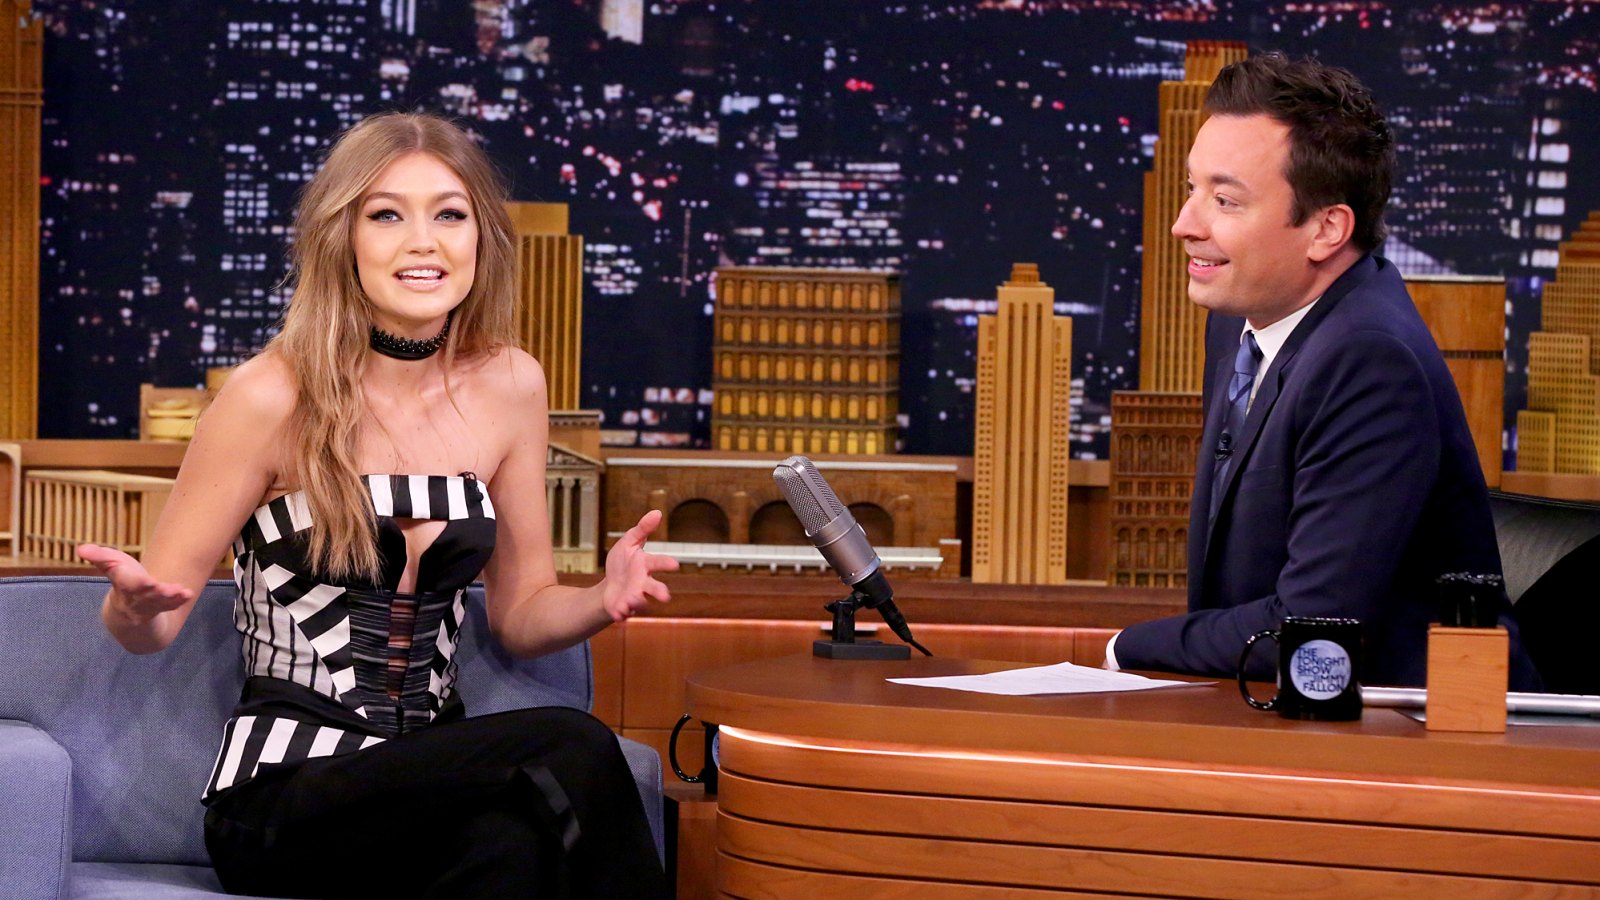 Gigi Hadid and Jimmy Fallon Eat Burgers on the Tonight Show